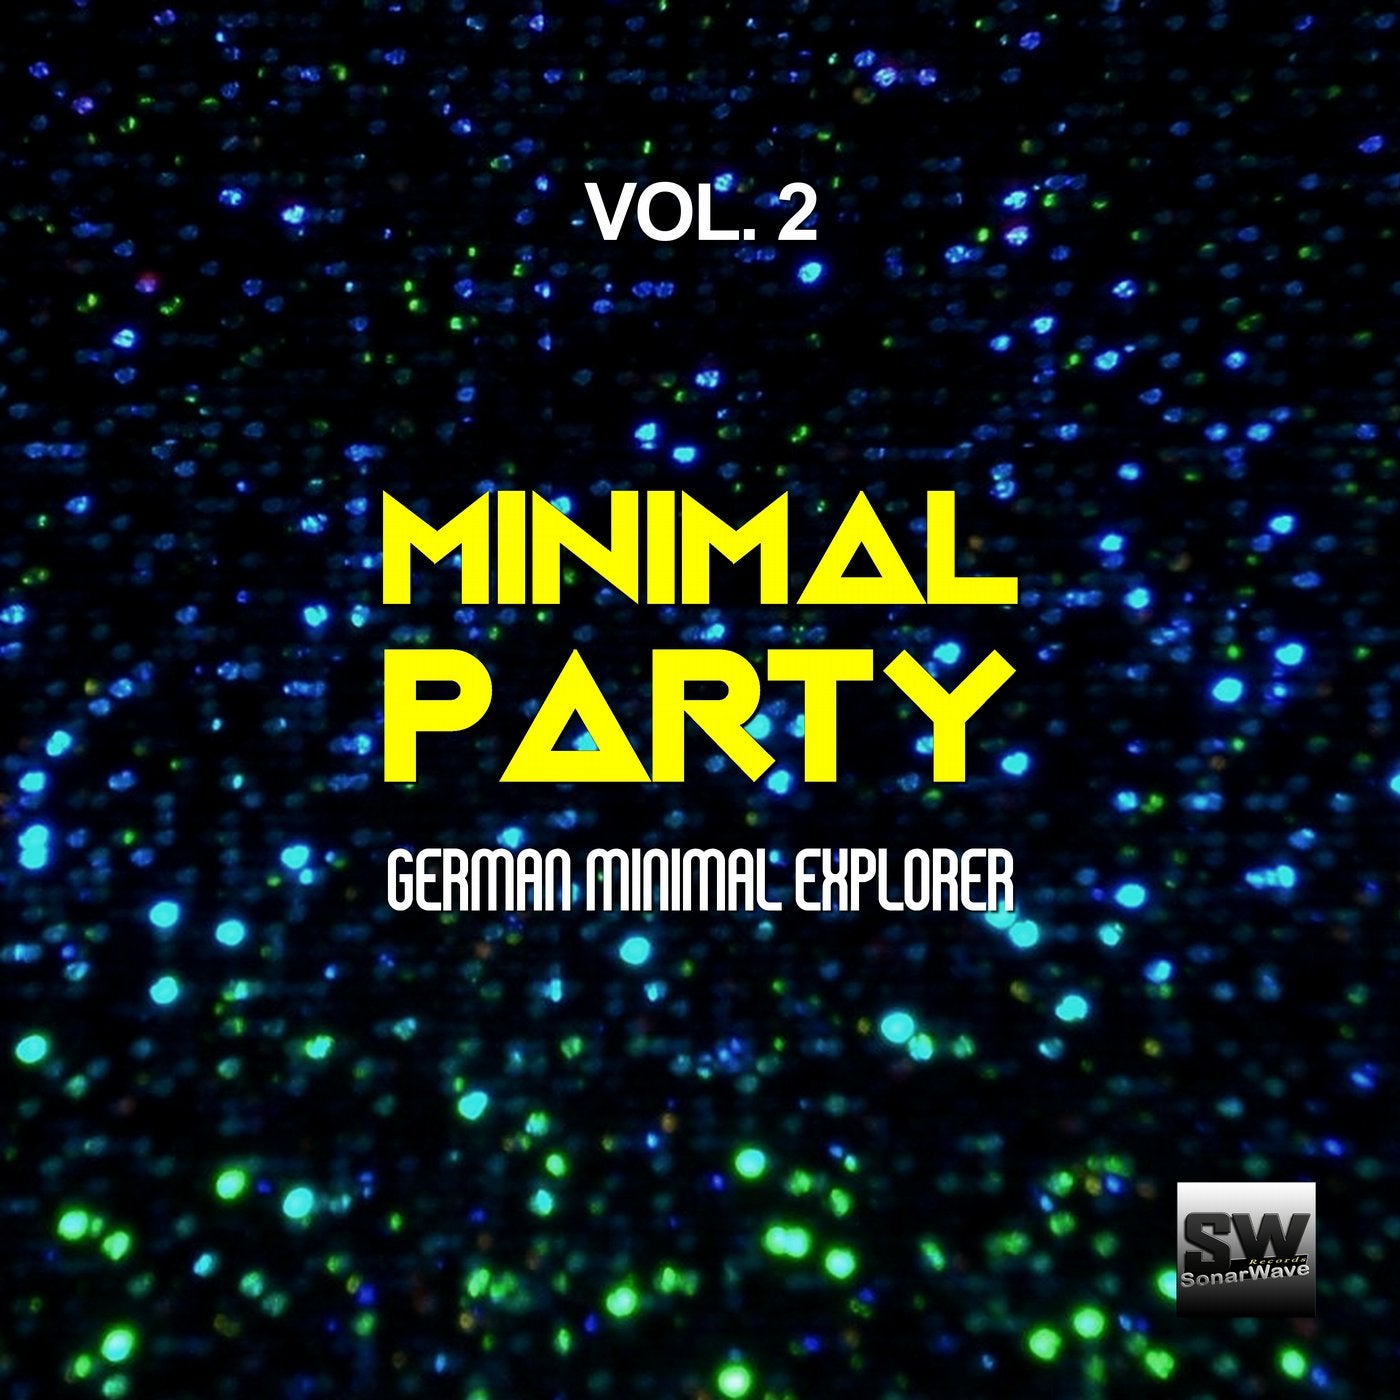 Minimal Party, Vol. 2 (German Minimal Explorer)